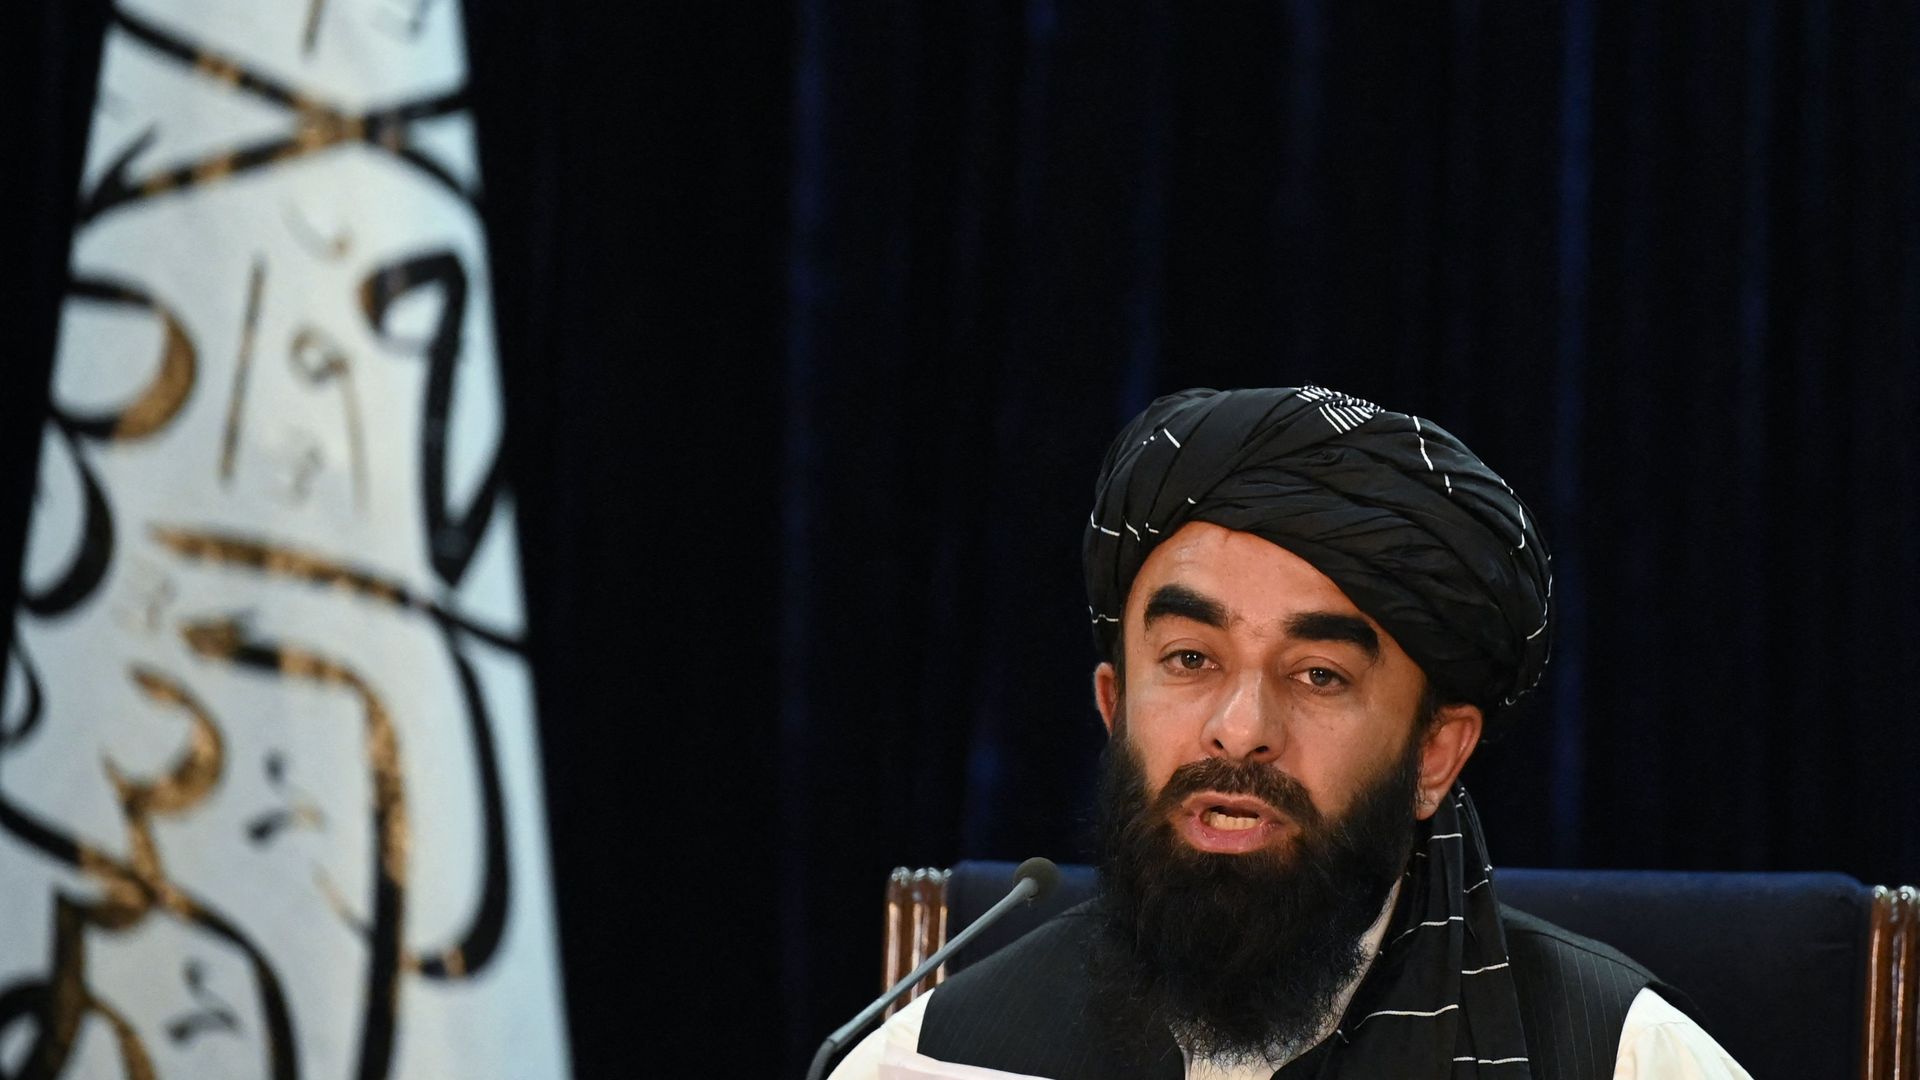 Taliban spokesman Zabihullah Mujahid speaks during a press conference in Kabul on September 7